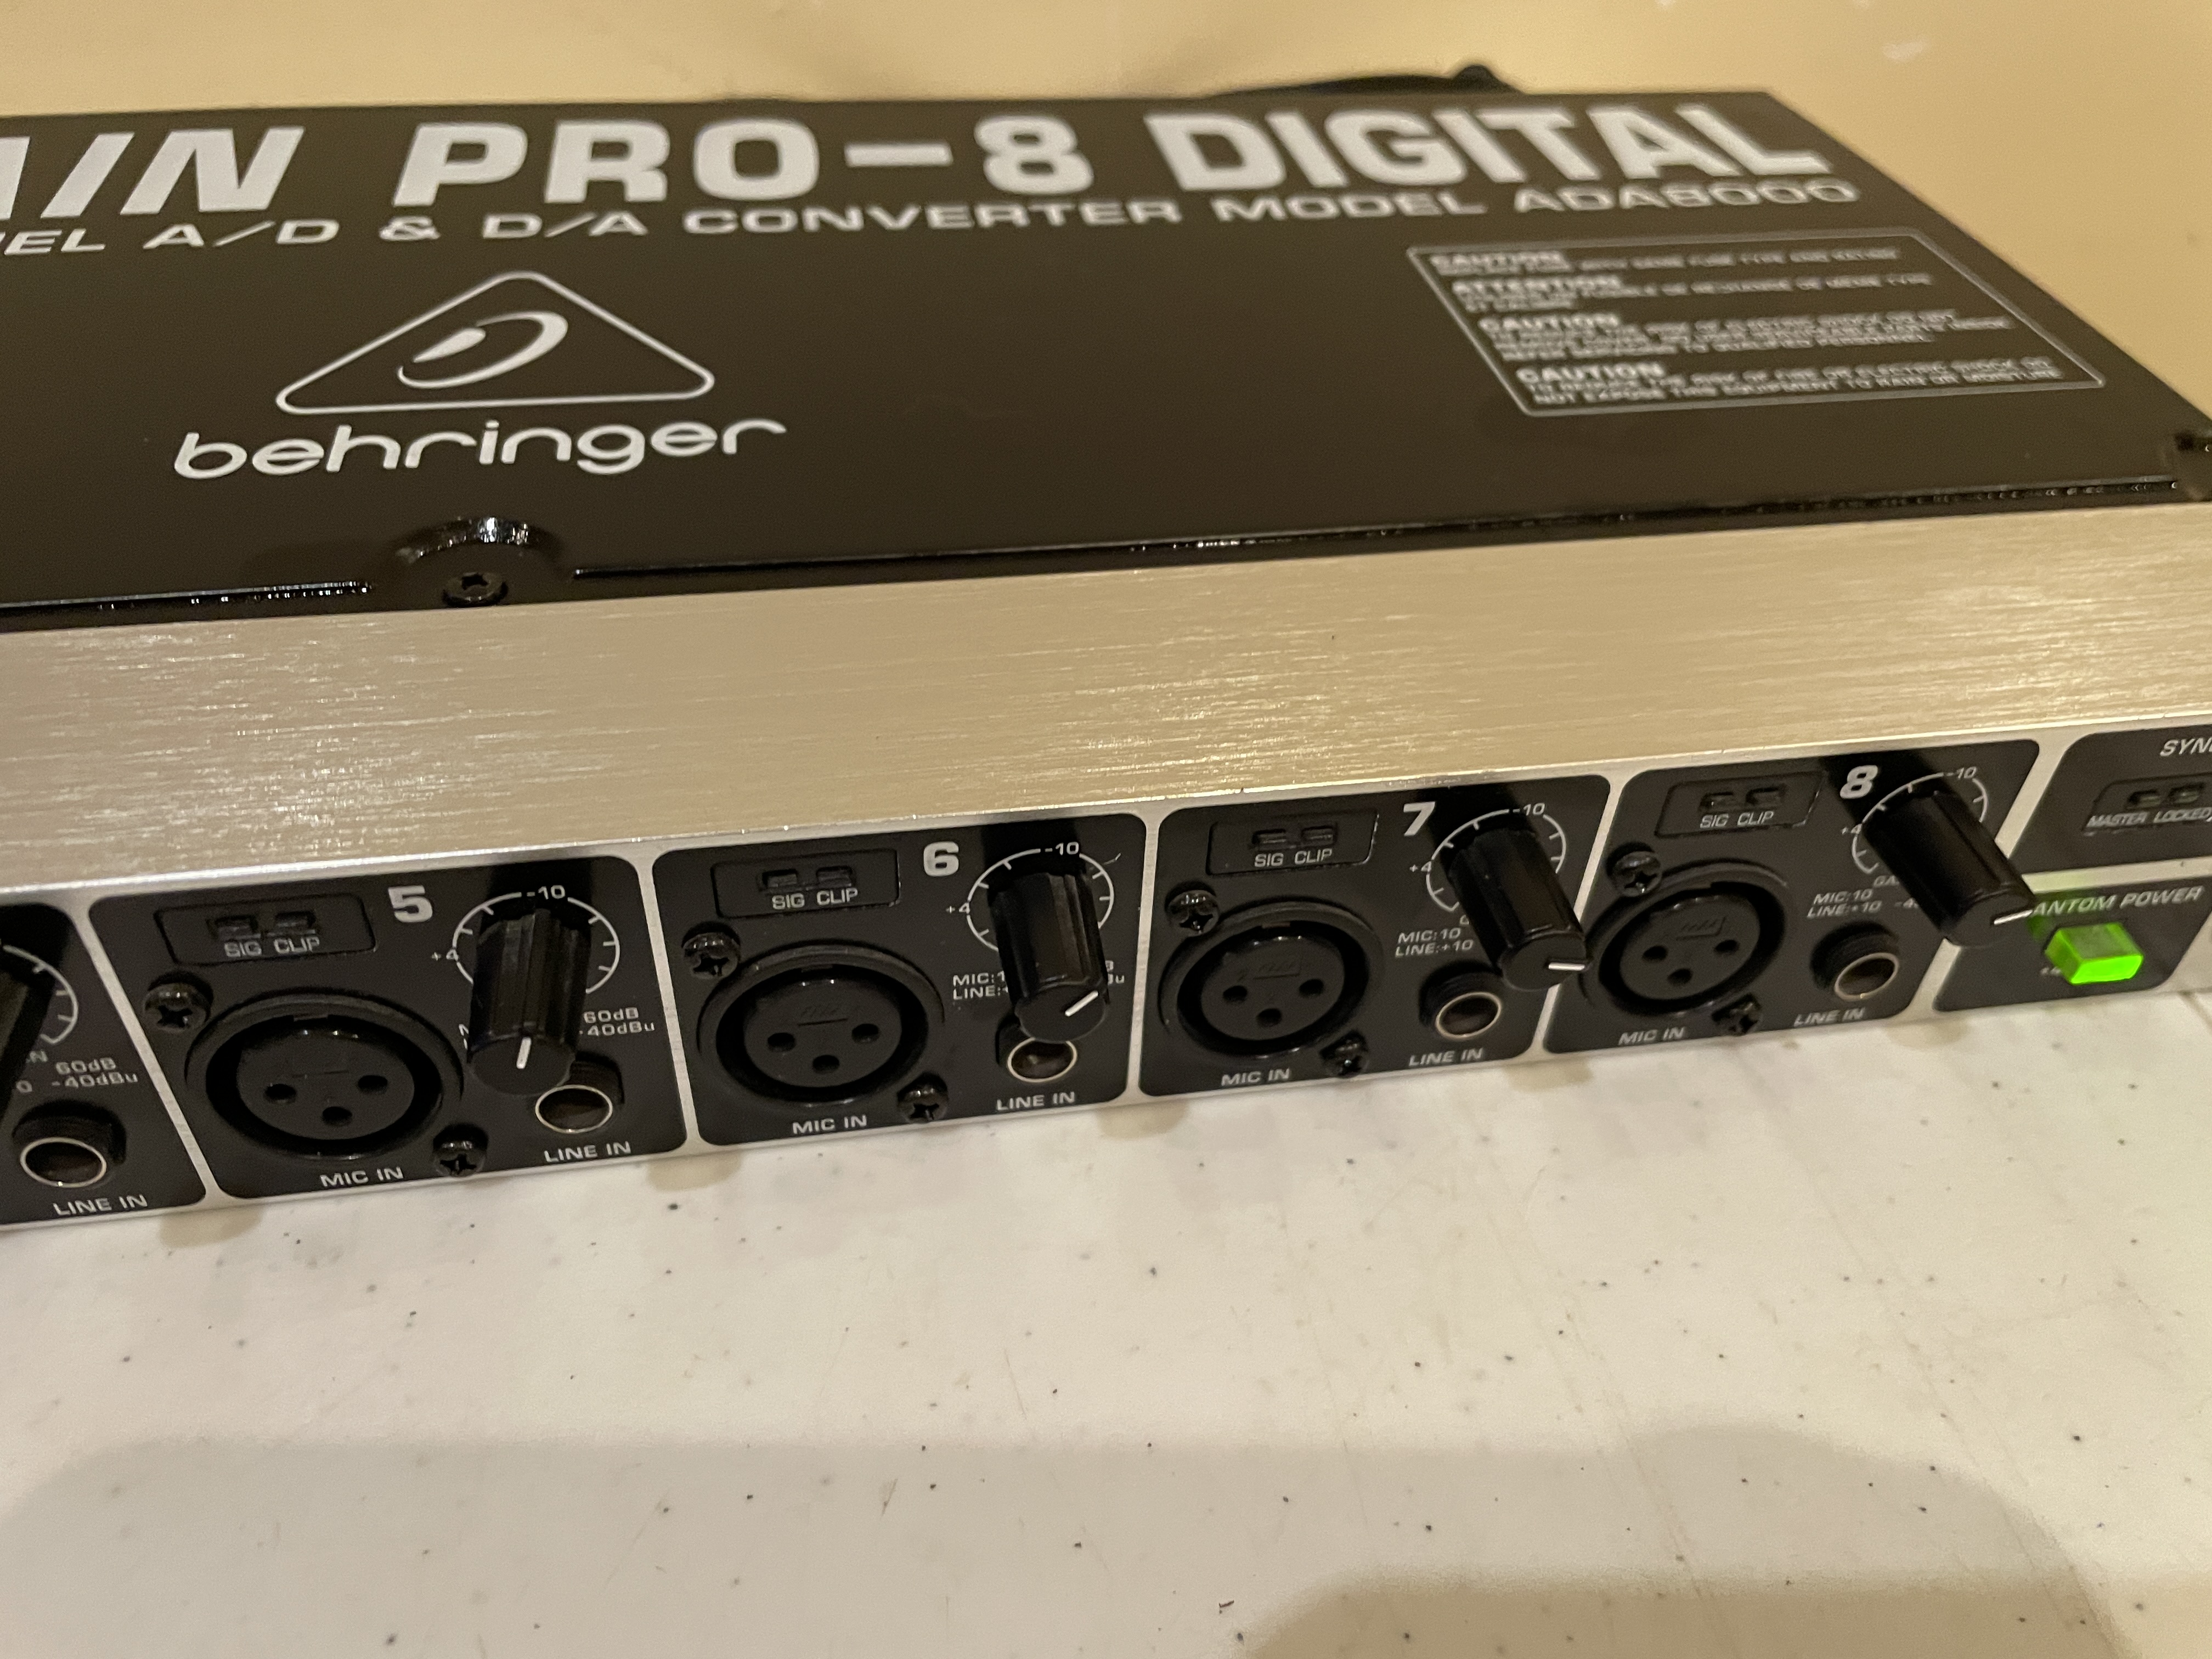 Ultragain Pro-8 Digital ADA8000 Behringer - Audiofanzine